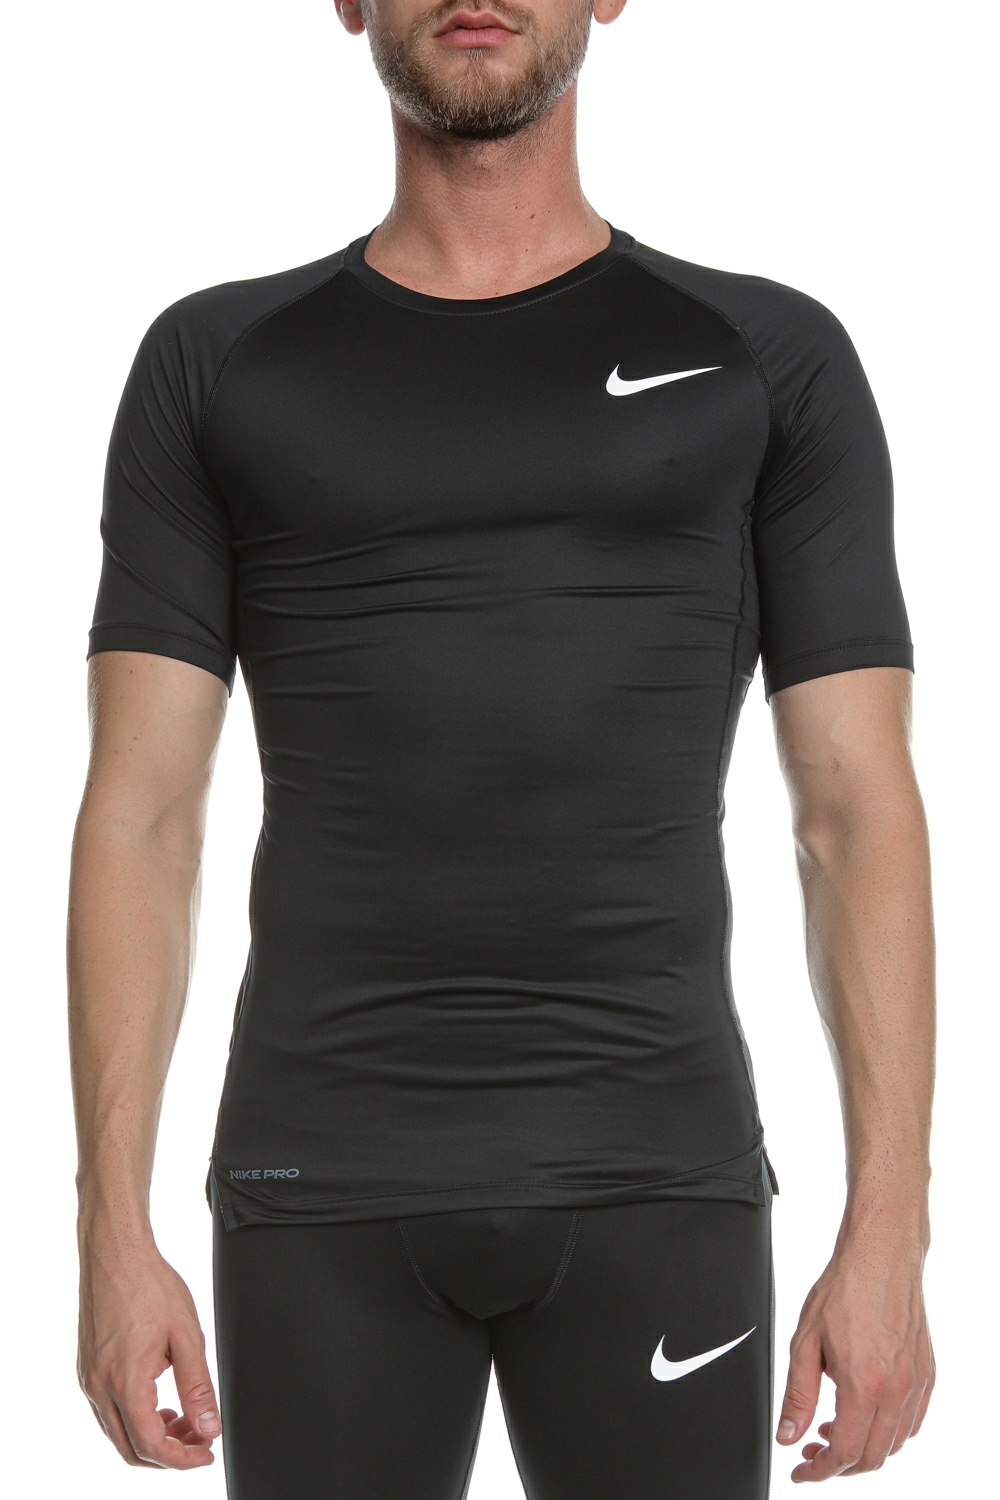 NIKE - Ανδρική κοντομάνικη μπλούζα NIKE μαύρη Ανδρικά/Ρούχα/Αθλητικά/T-shirt